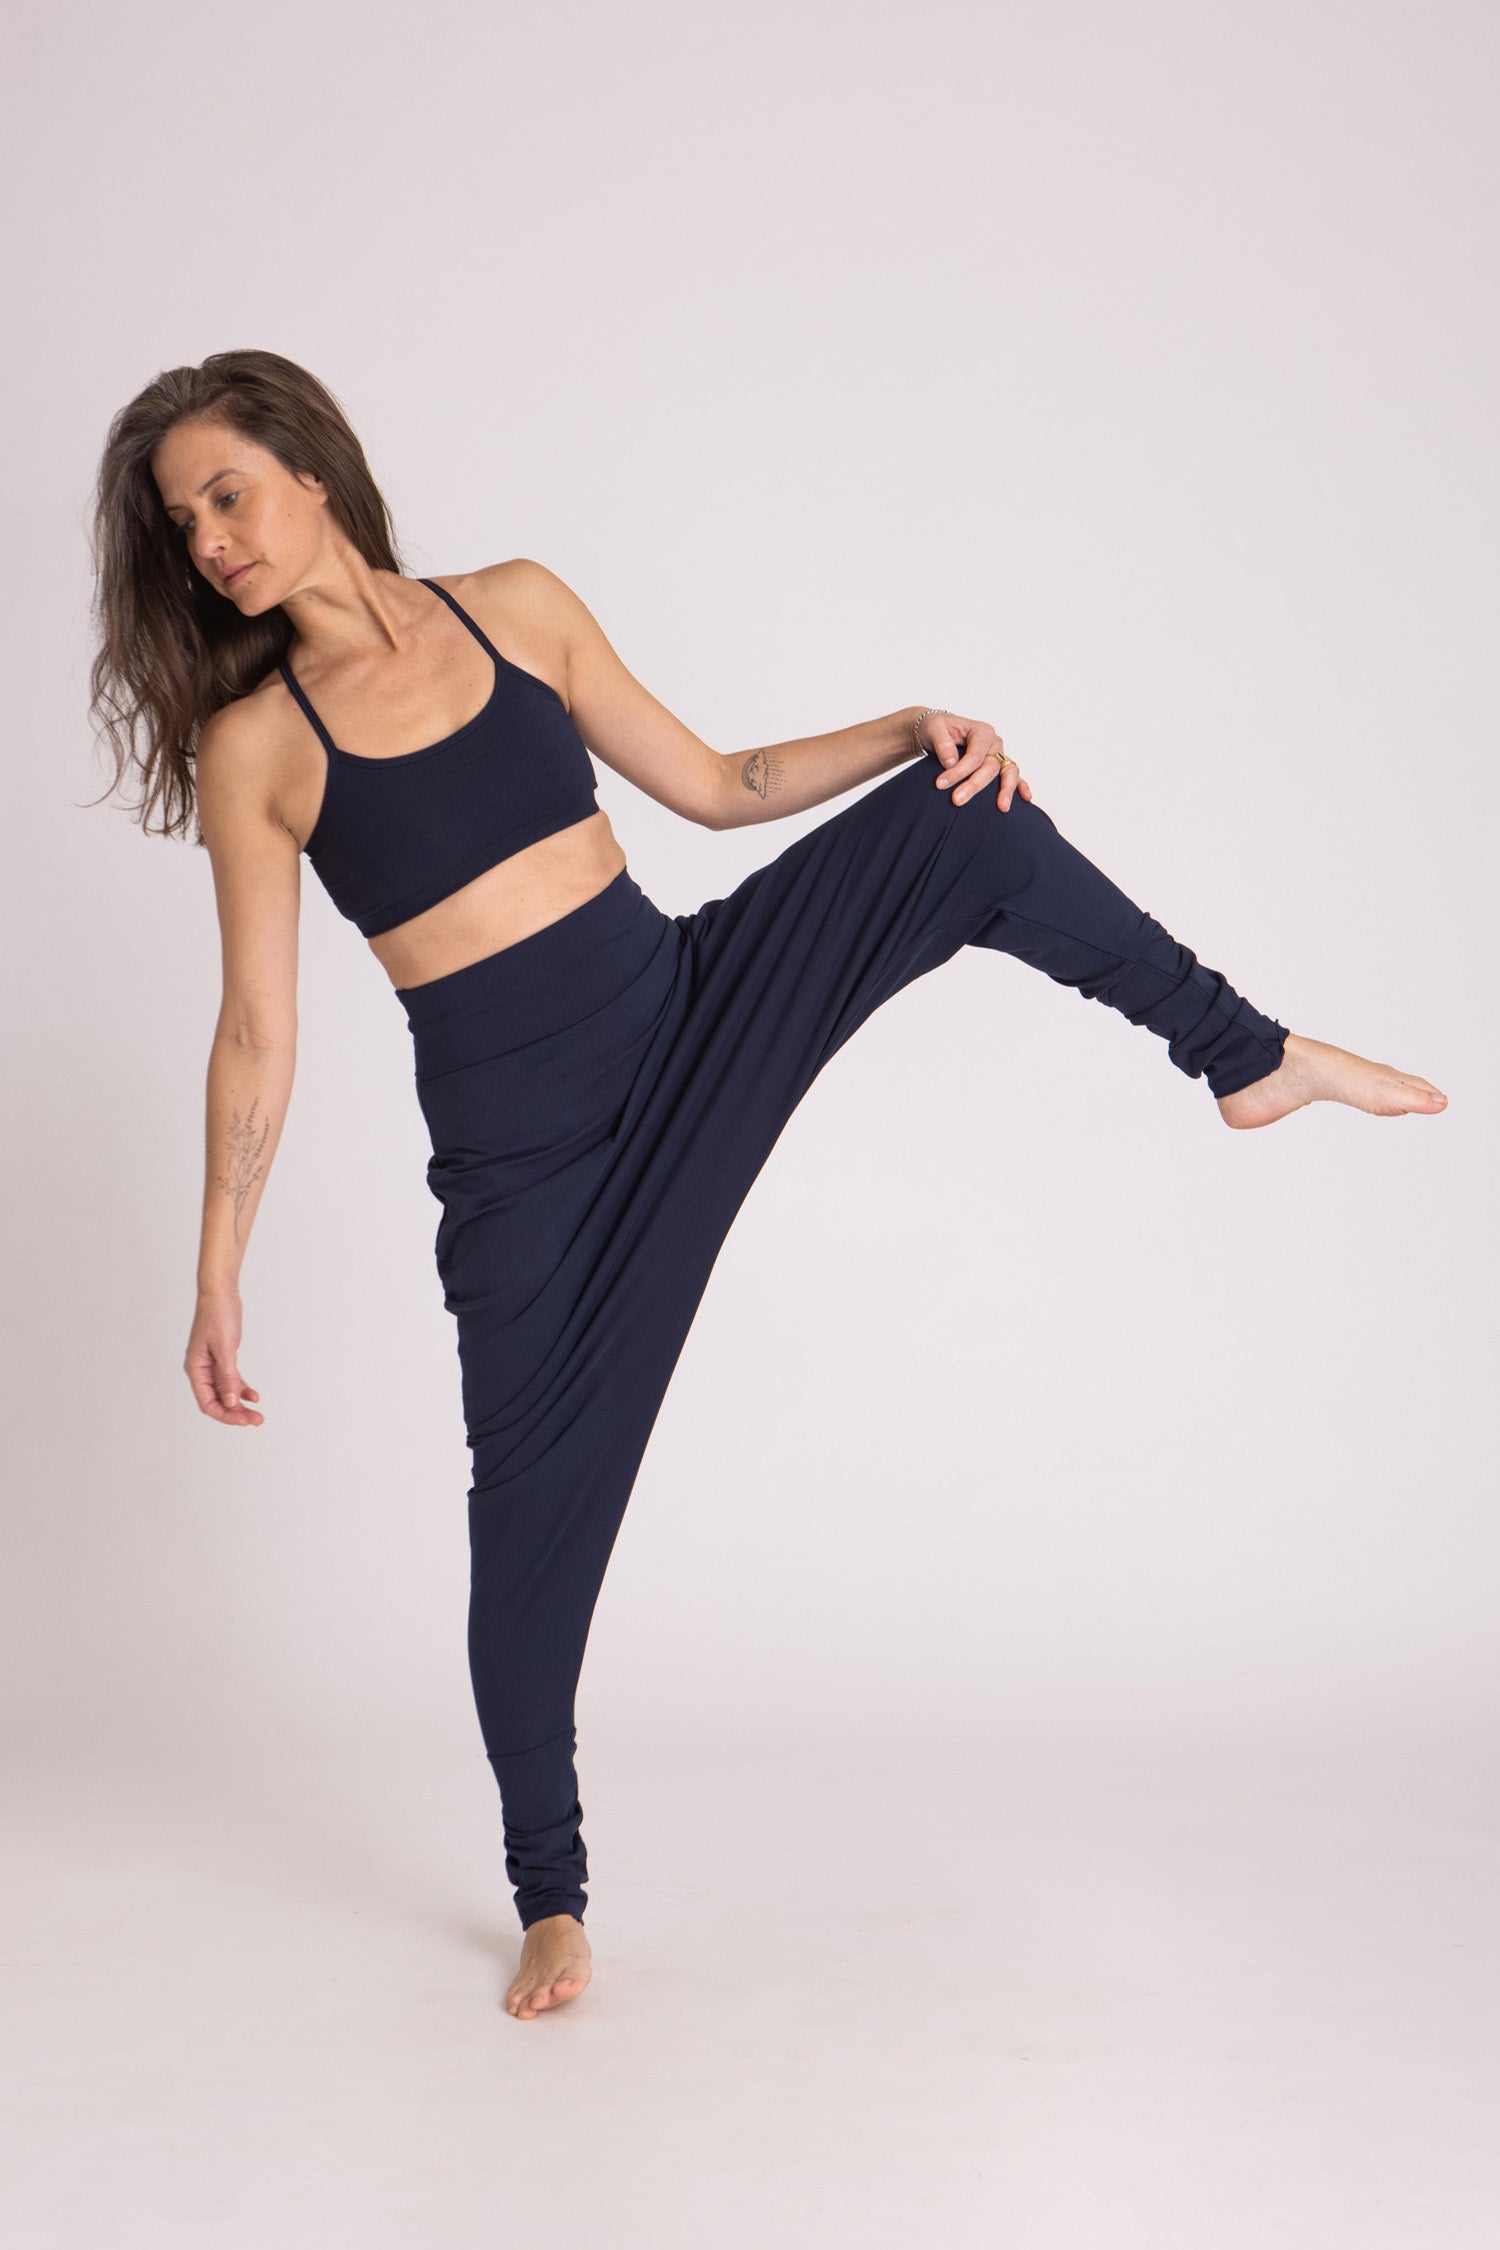 Organic Yoga Clothes -  Canada